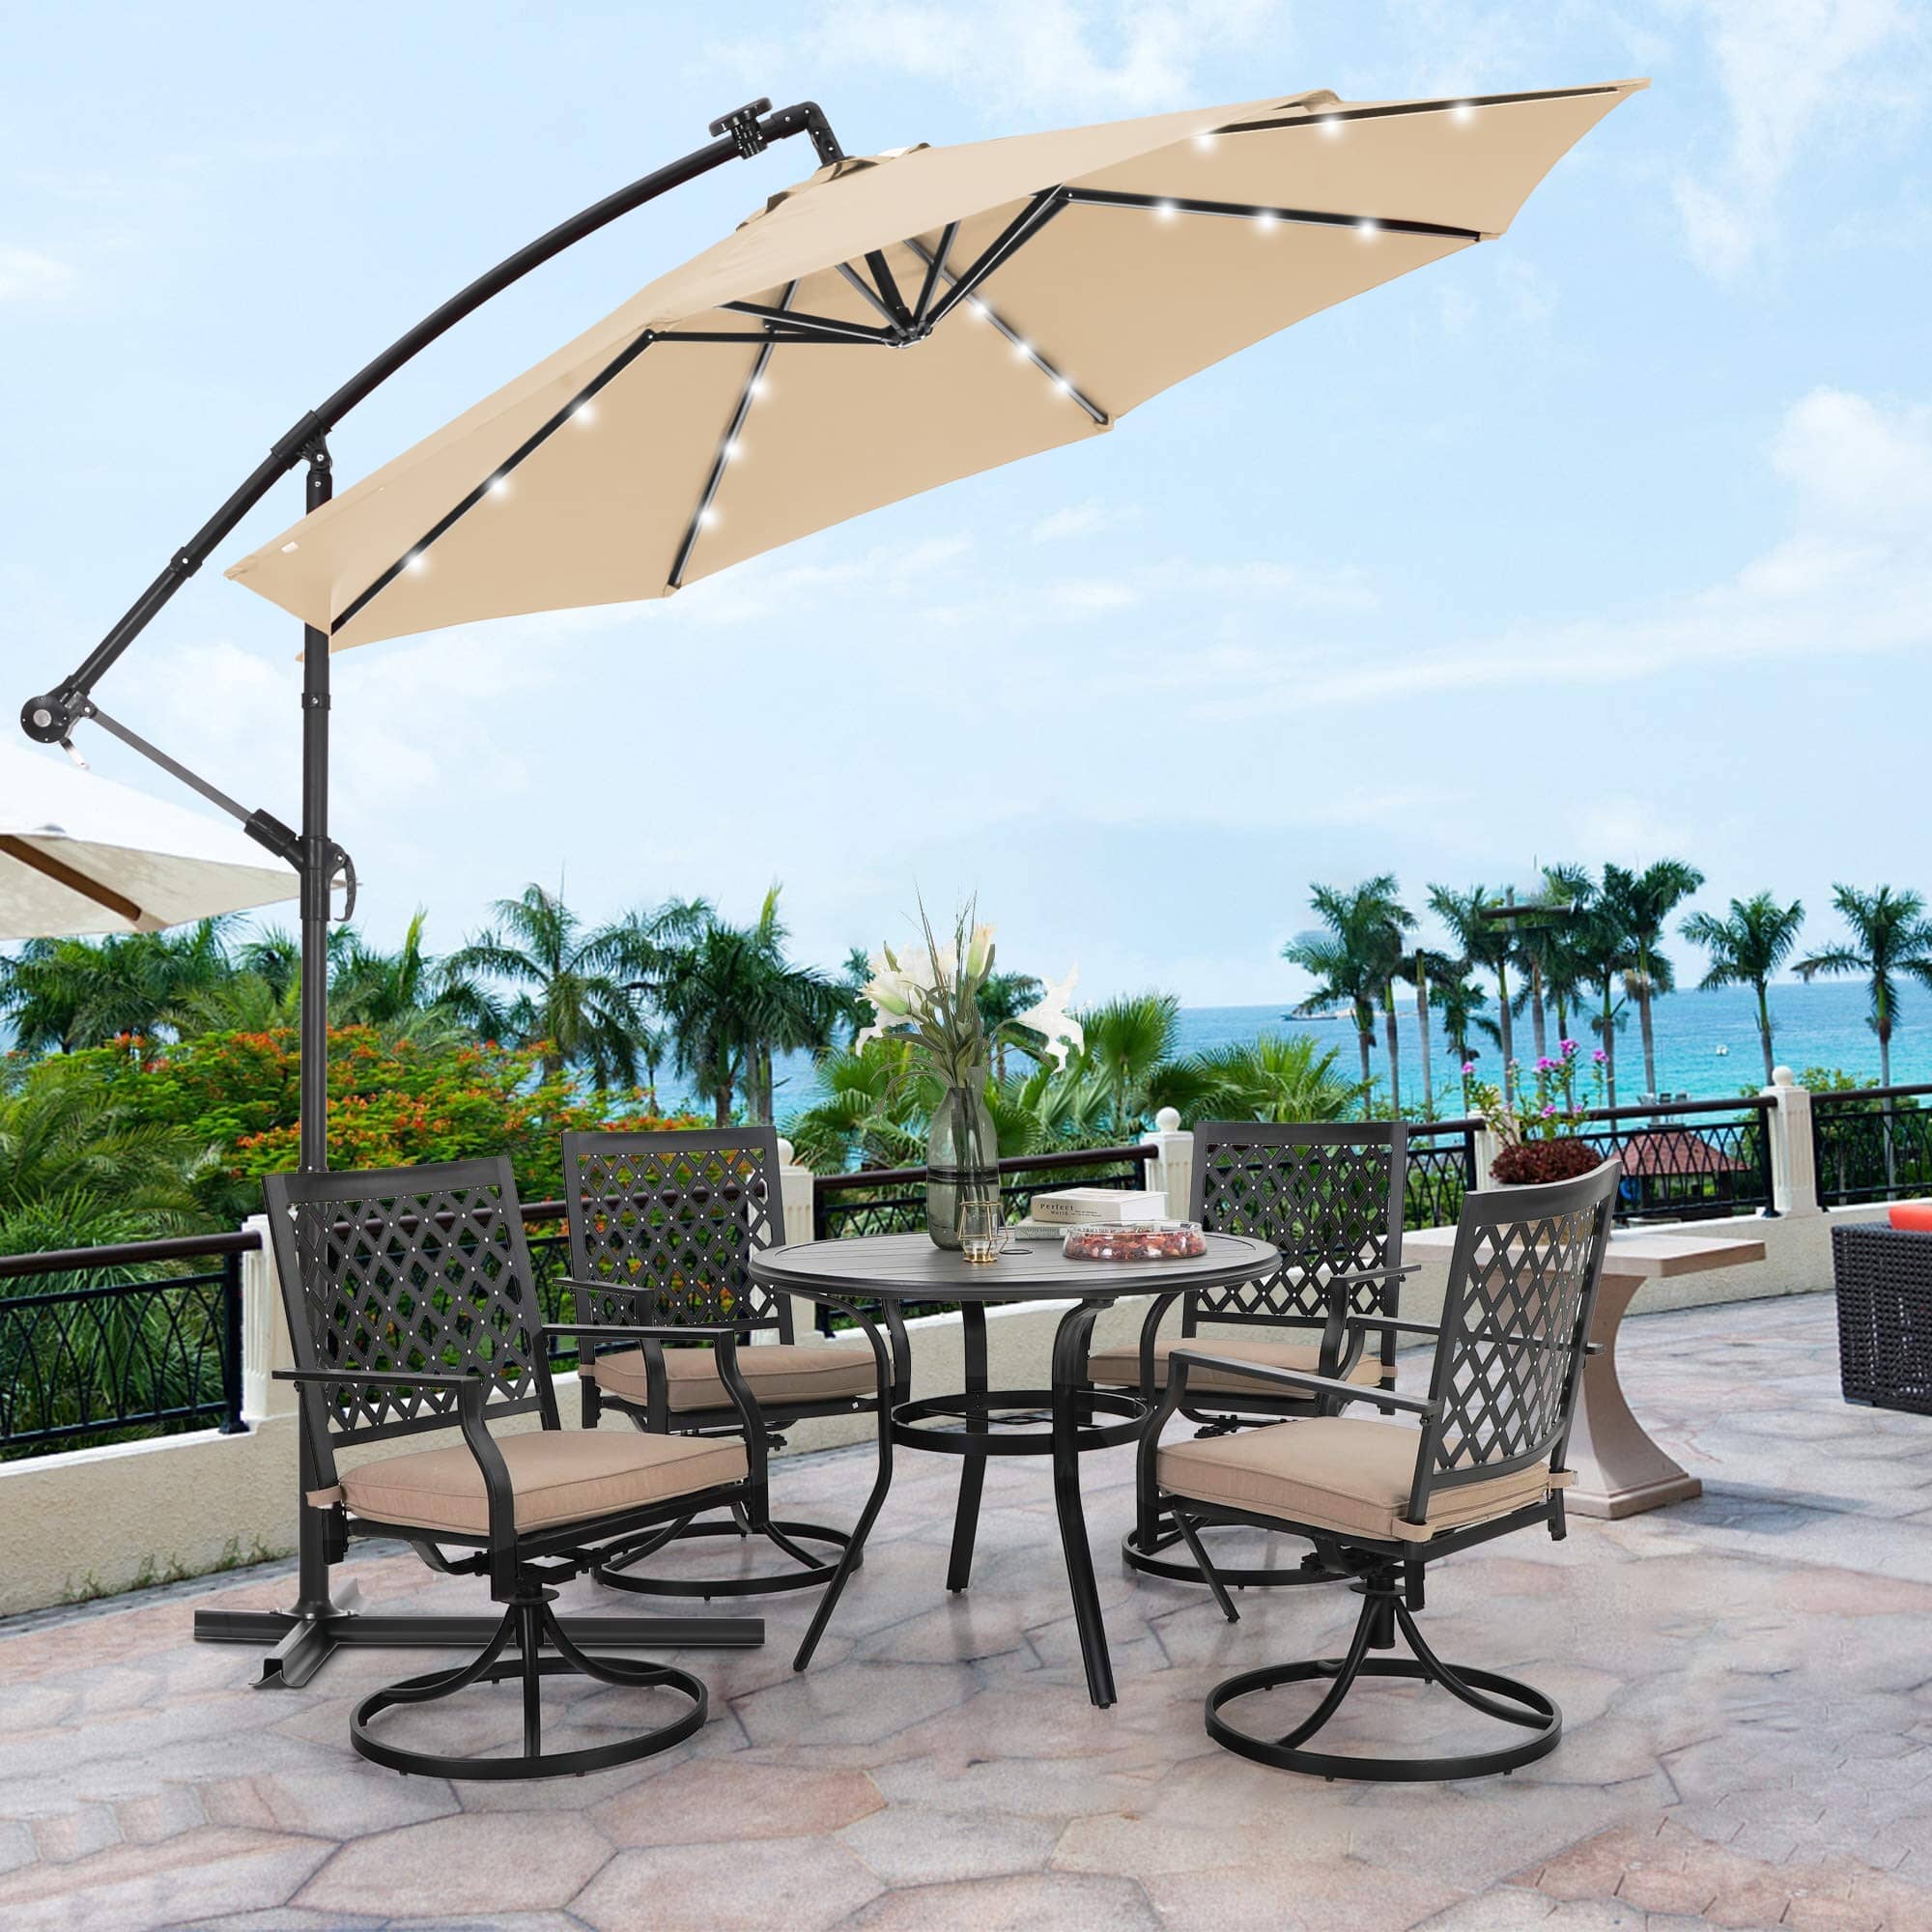 Casainc 10 FT Solar LED Patio Outdoor Umbrella Hanging Cantilever Umbrella Offset Umbrella with 24 LED Lights